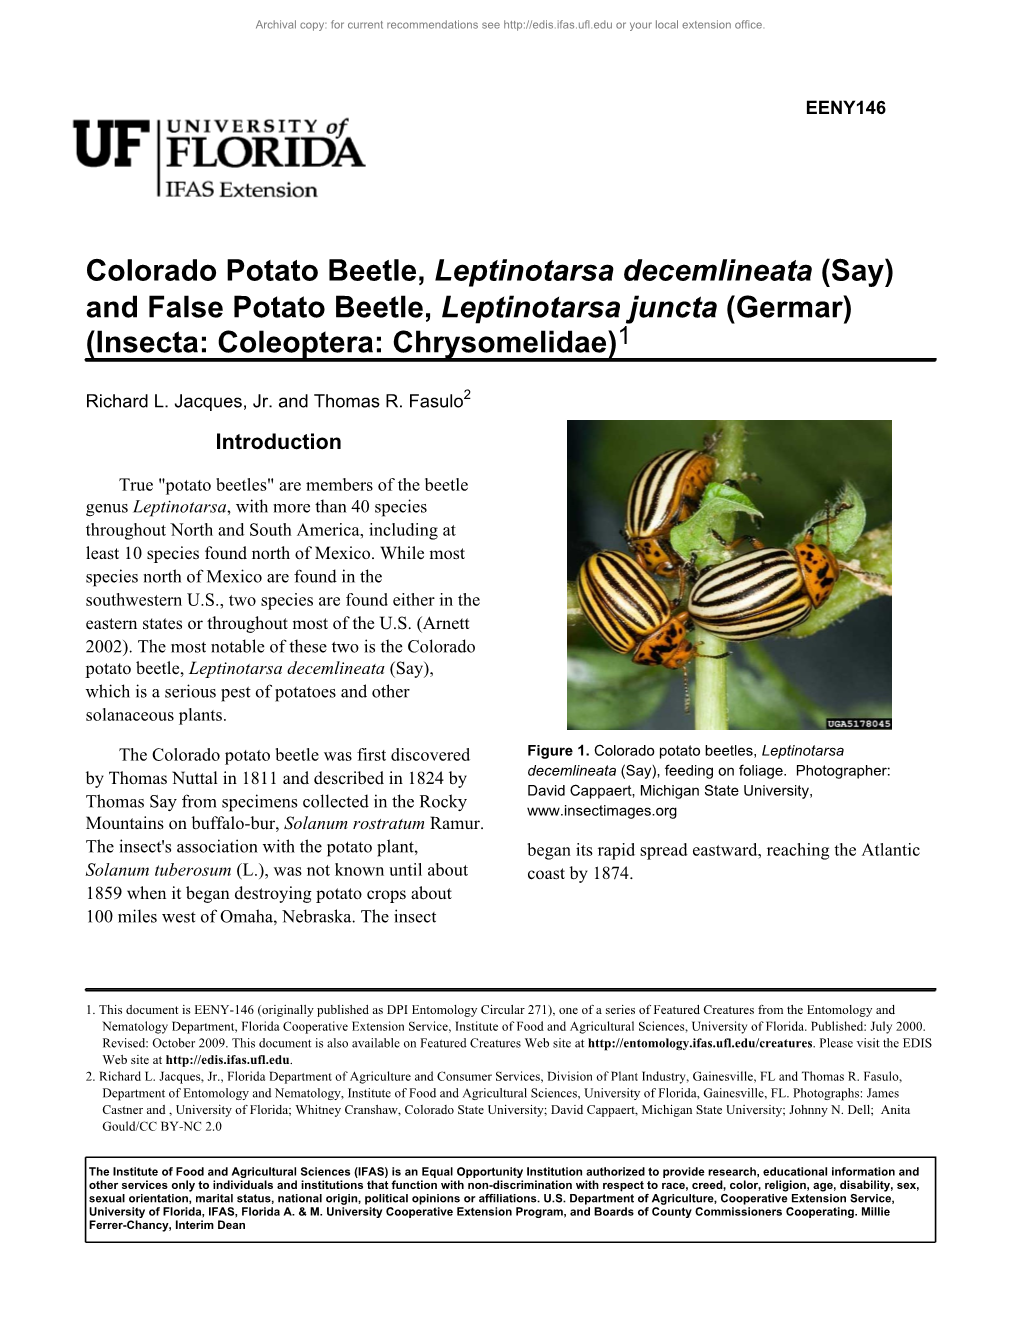 Colorado Potato Beetle, Leptinotarsa Decemlineata (Say) and False Potato Beetle, Leptinotarsa Juncta (Germar) (Insecta: Coleoptera: Chrysomelidae)1